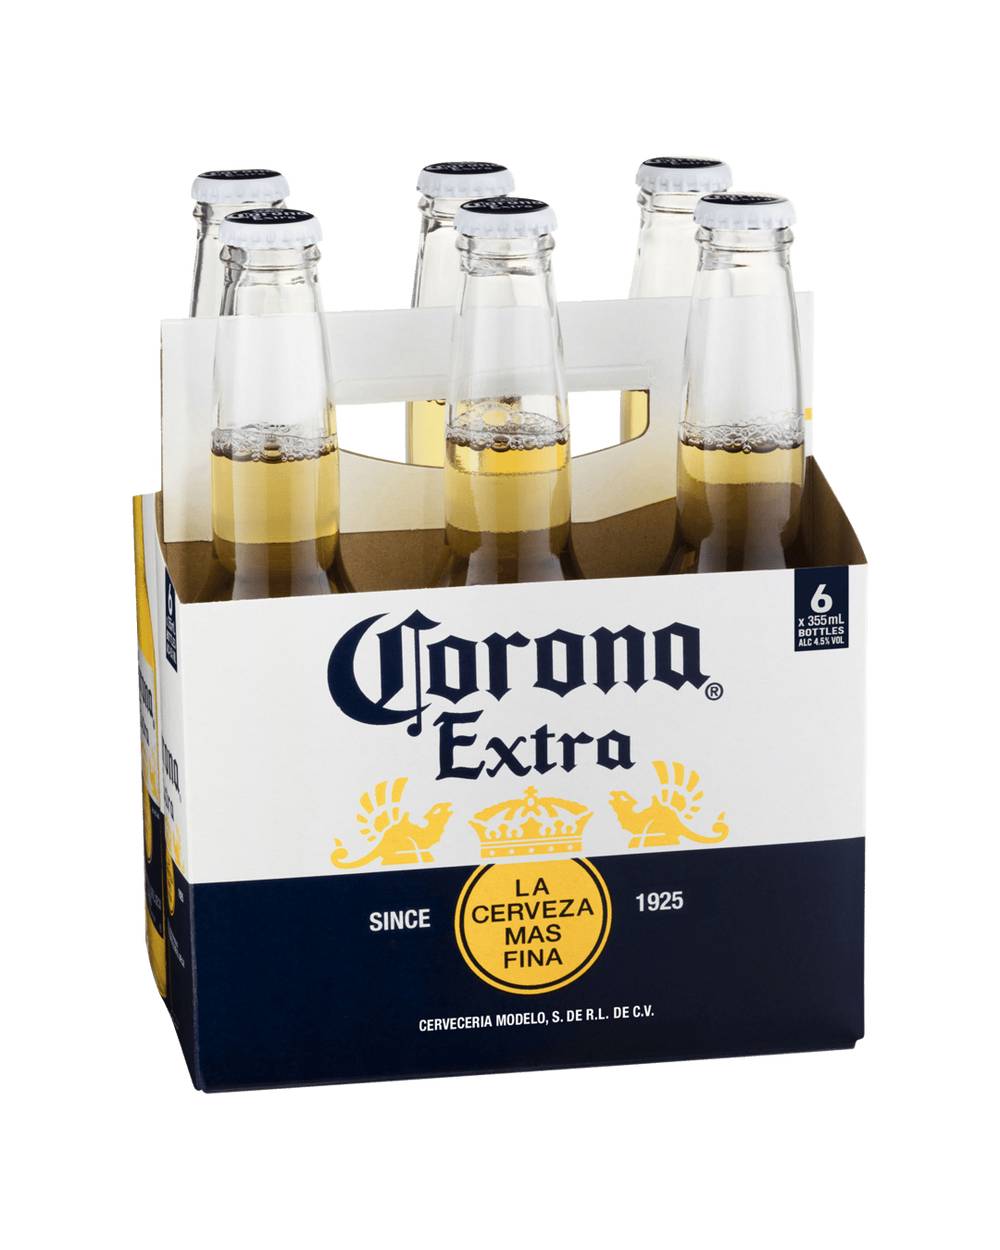 Corona Extra Lager Bottle 6x355ml